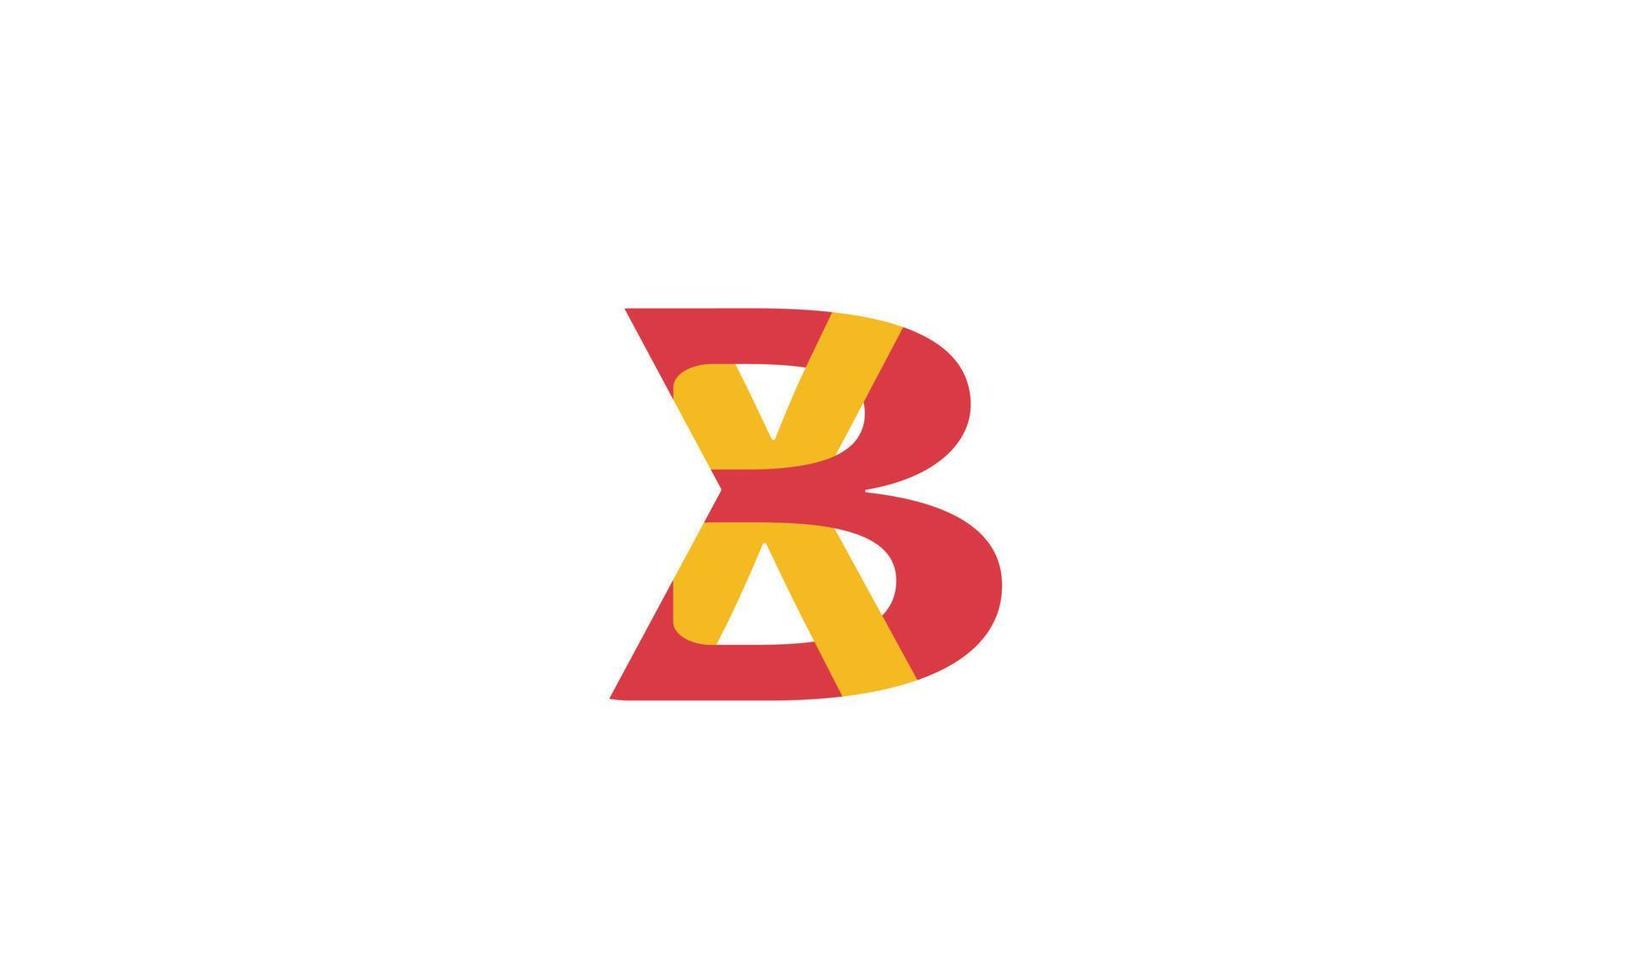 alfabeto lettere iniziali monogramma logo xb, bx, x e b vettore